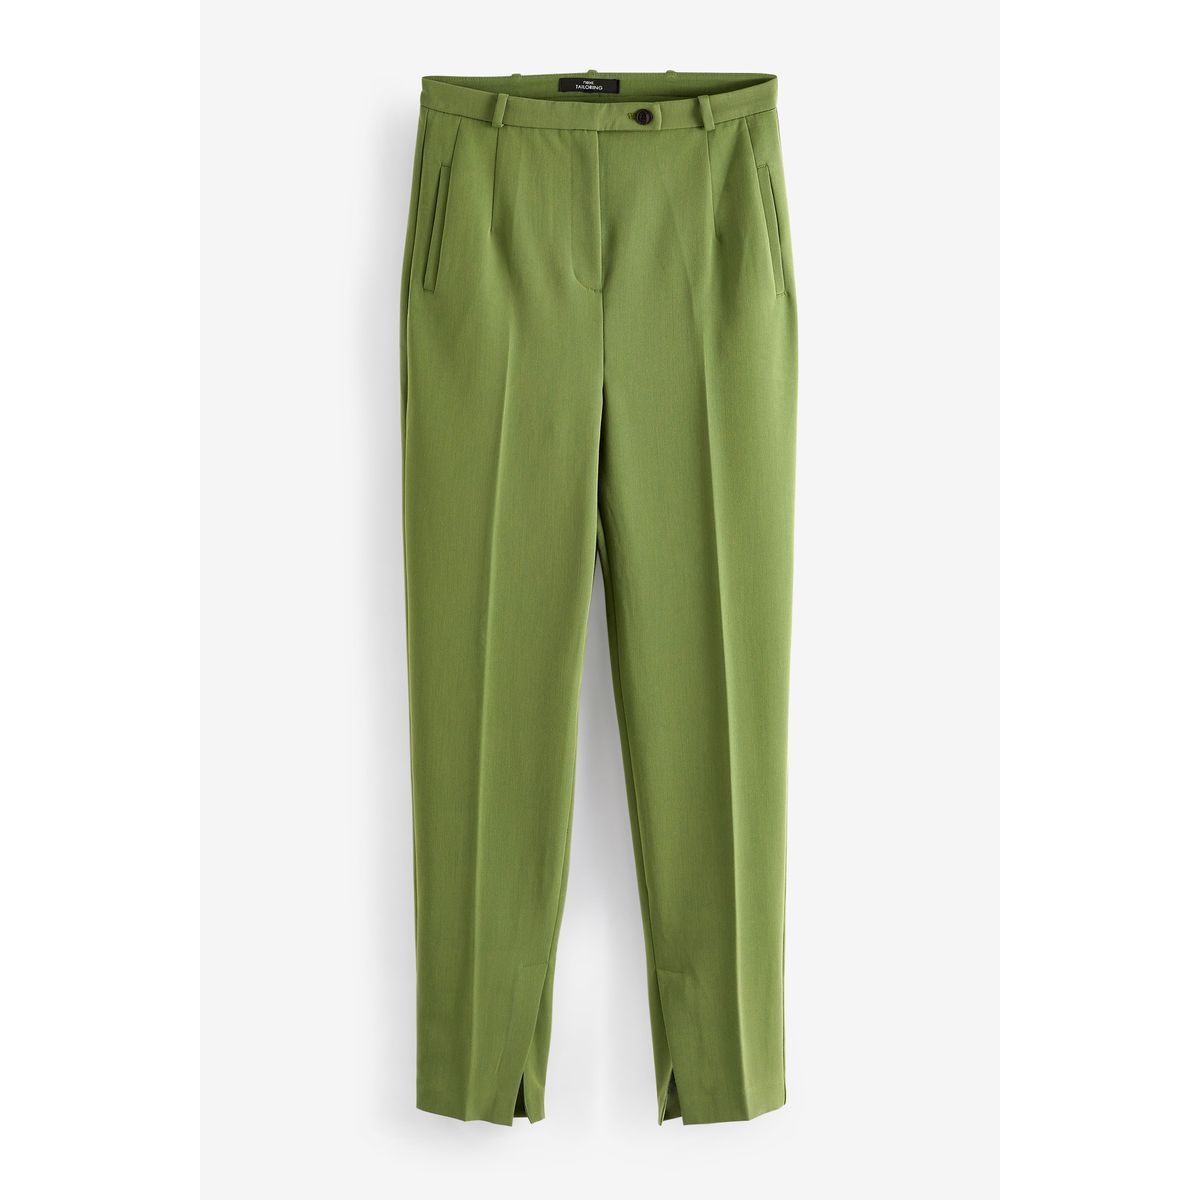 Mode Costumes Tailleurs-pantalon Rena Lange Tailleur-pantalon vert motif de fleur style d\u00e9contract\u00e9 